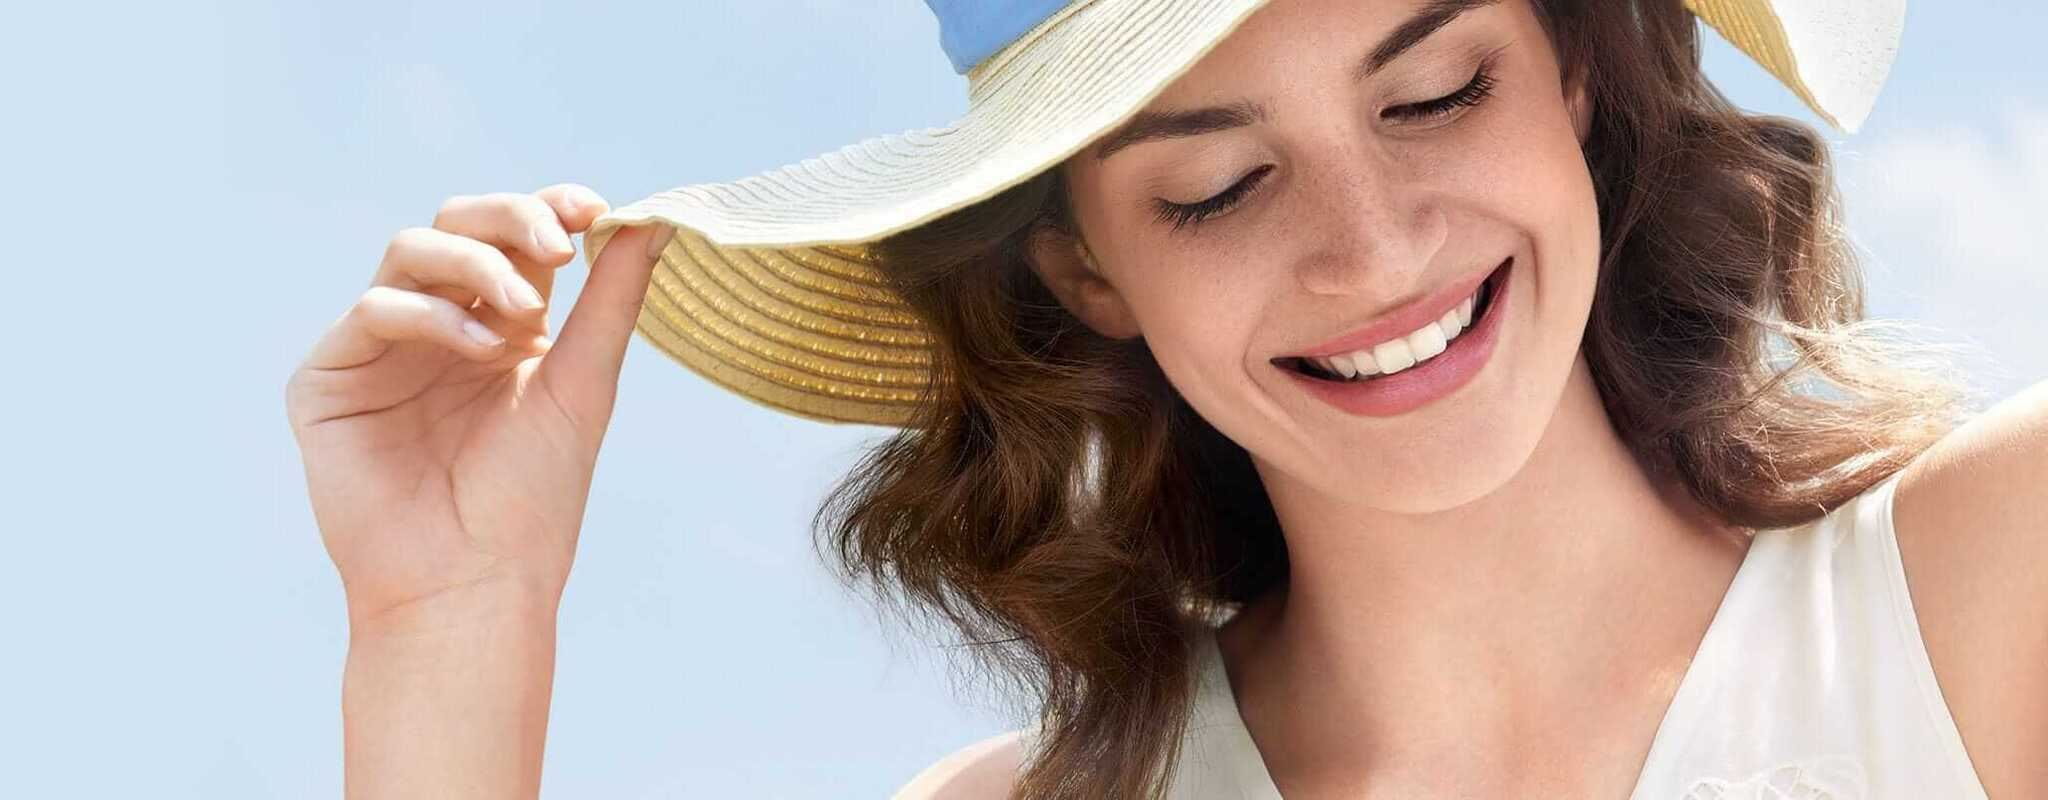 Woman enjoying the sun while using NIVEA deodorants for protection